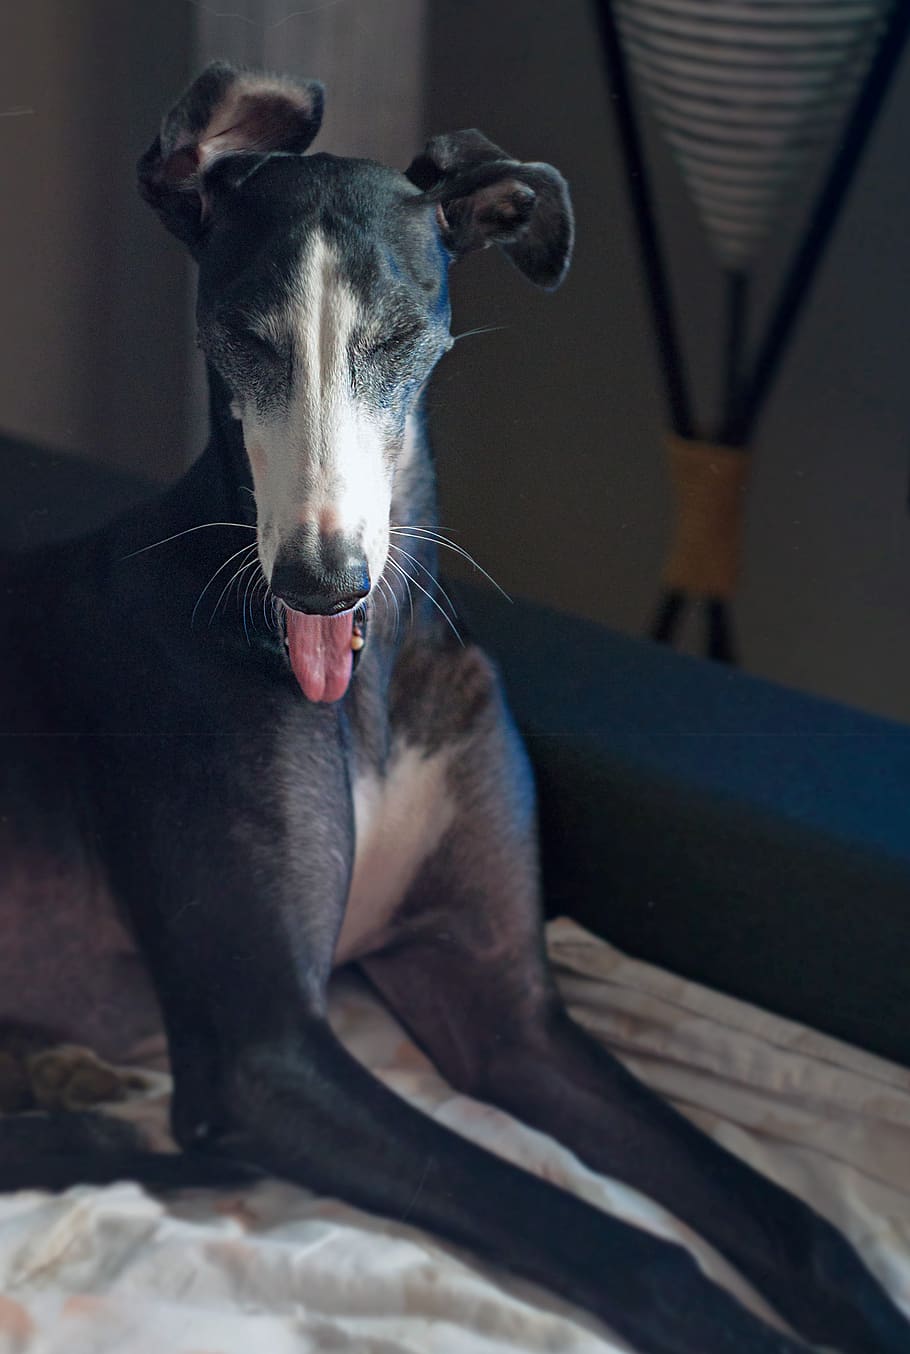 galgo, spanish greyhound, espanol, dog, canine, animal, pet, greyhound, spanish, portrait